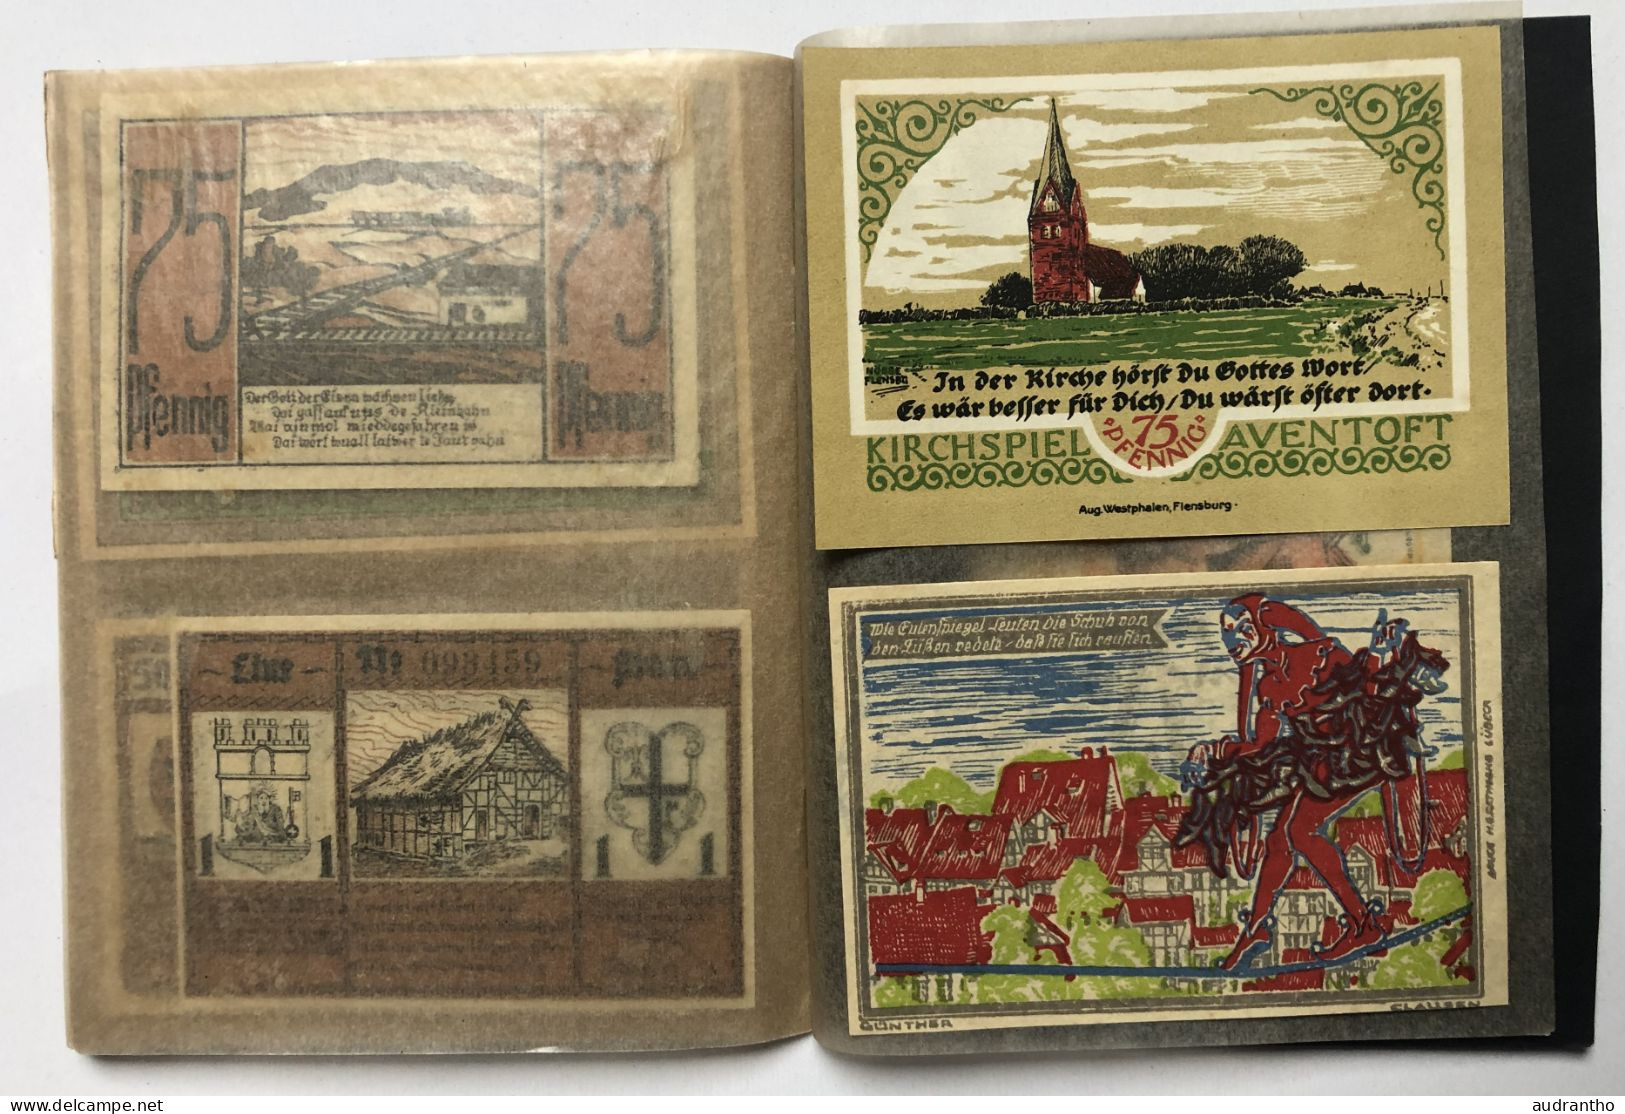 livret rare avec 19 billets allemands Notgeld années 1920 - BREMEN Deutsche amerika woche